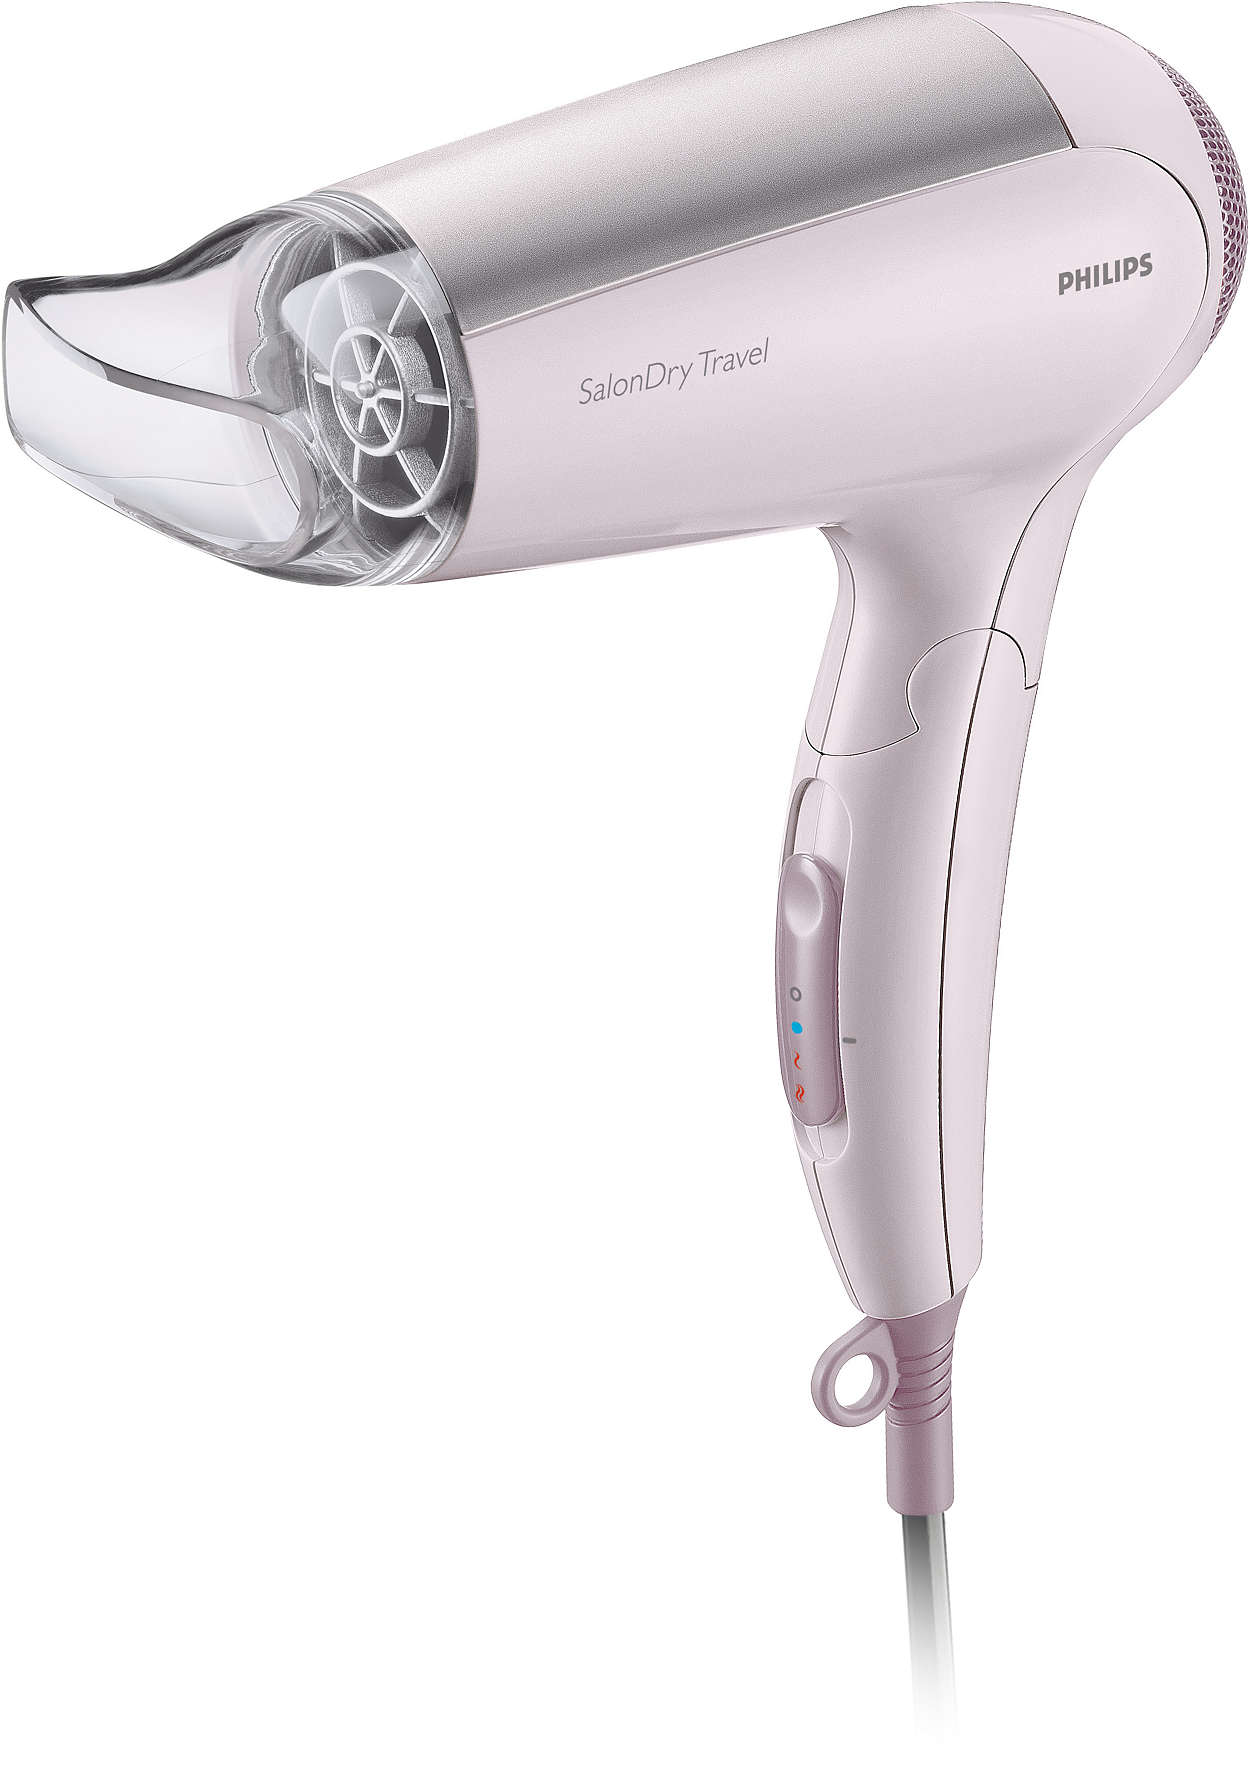 SalonDry Hairdryer HP4940/00 | Philips